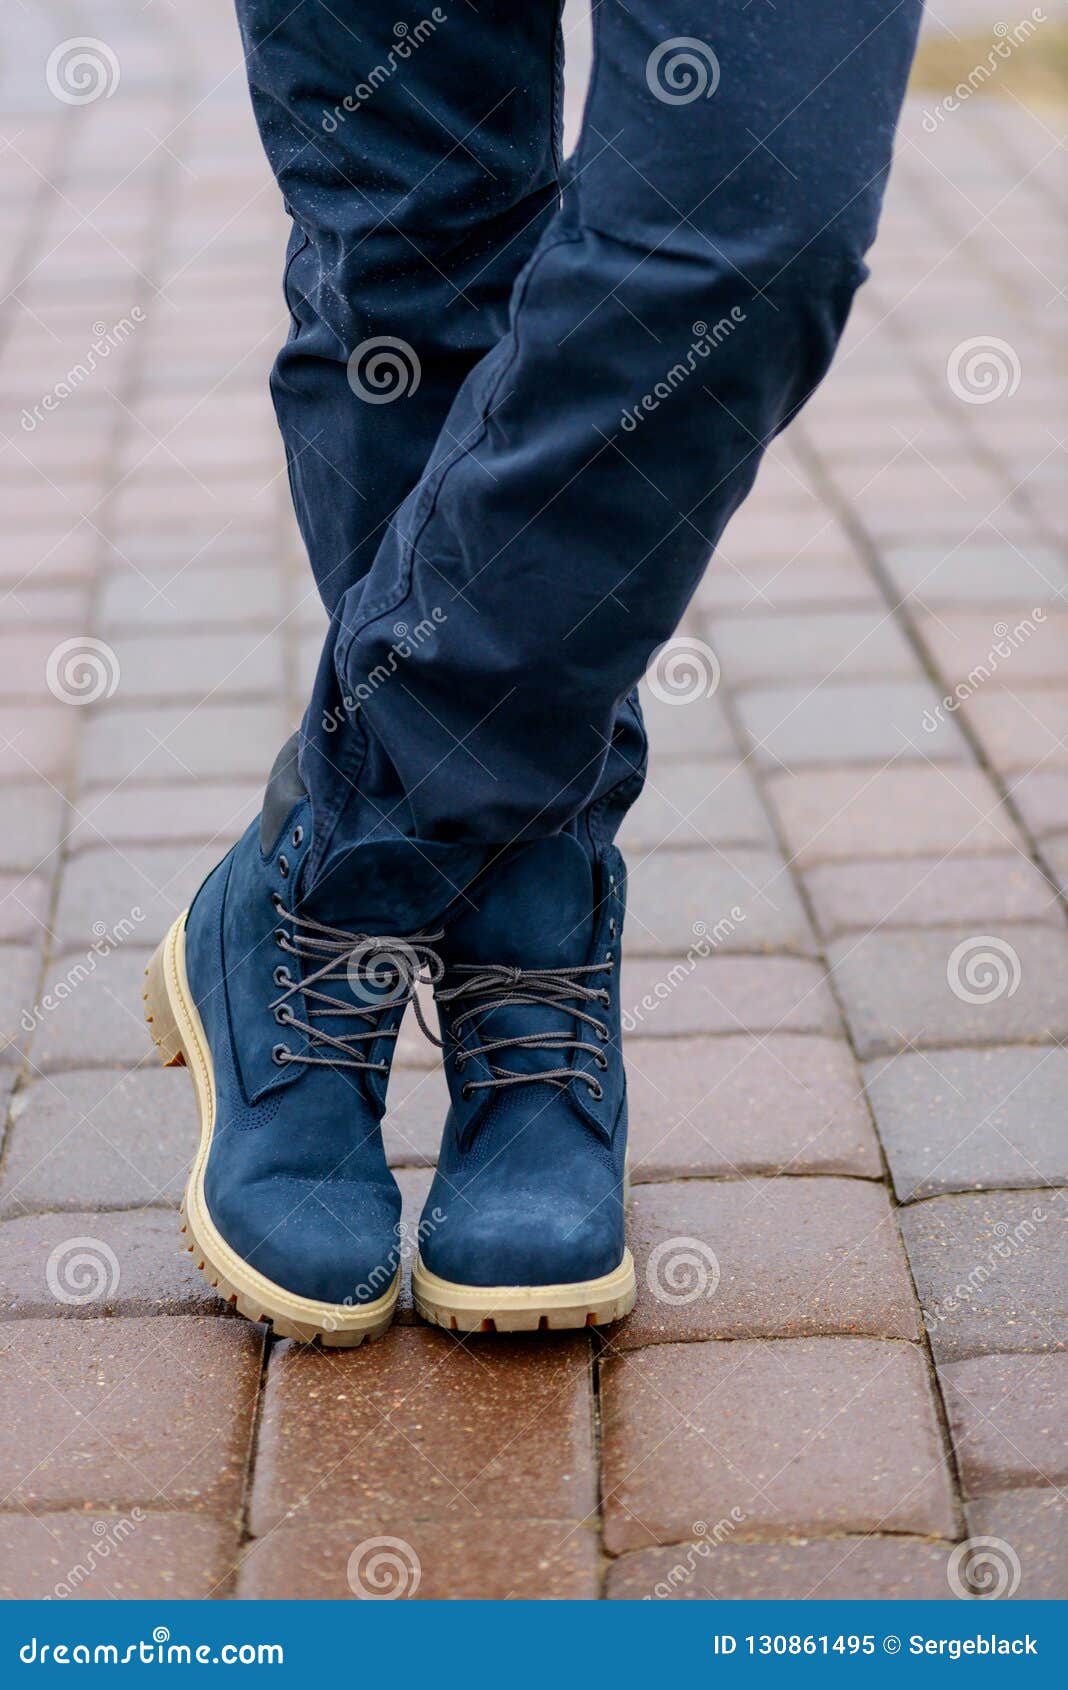 Jeg er stolt Picket bånd Blue Boots on Men`s Legs in Blue Jeans Stock Image - Image of boot, field:  130861495